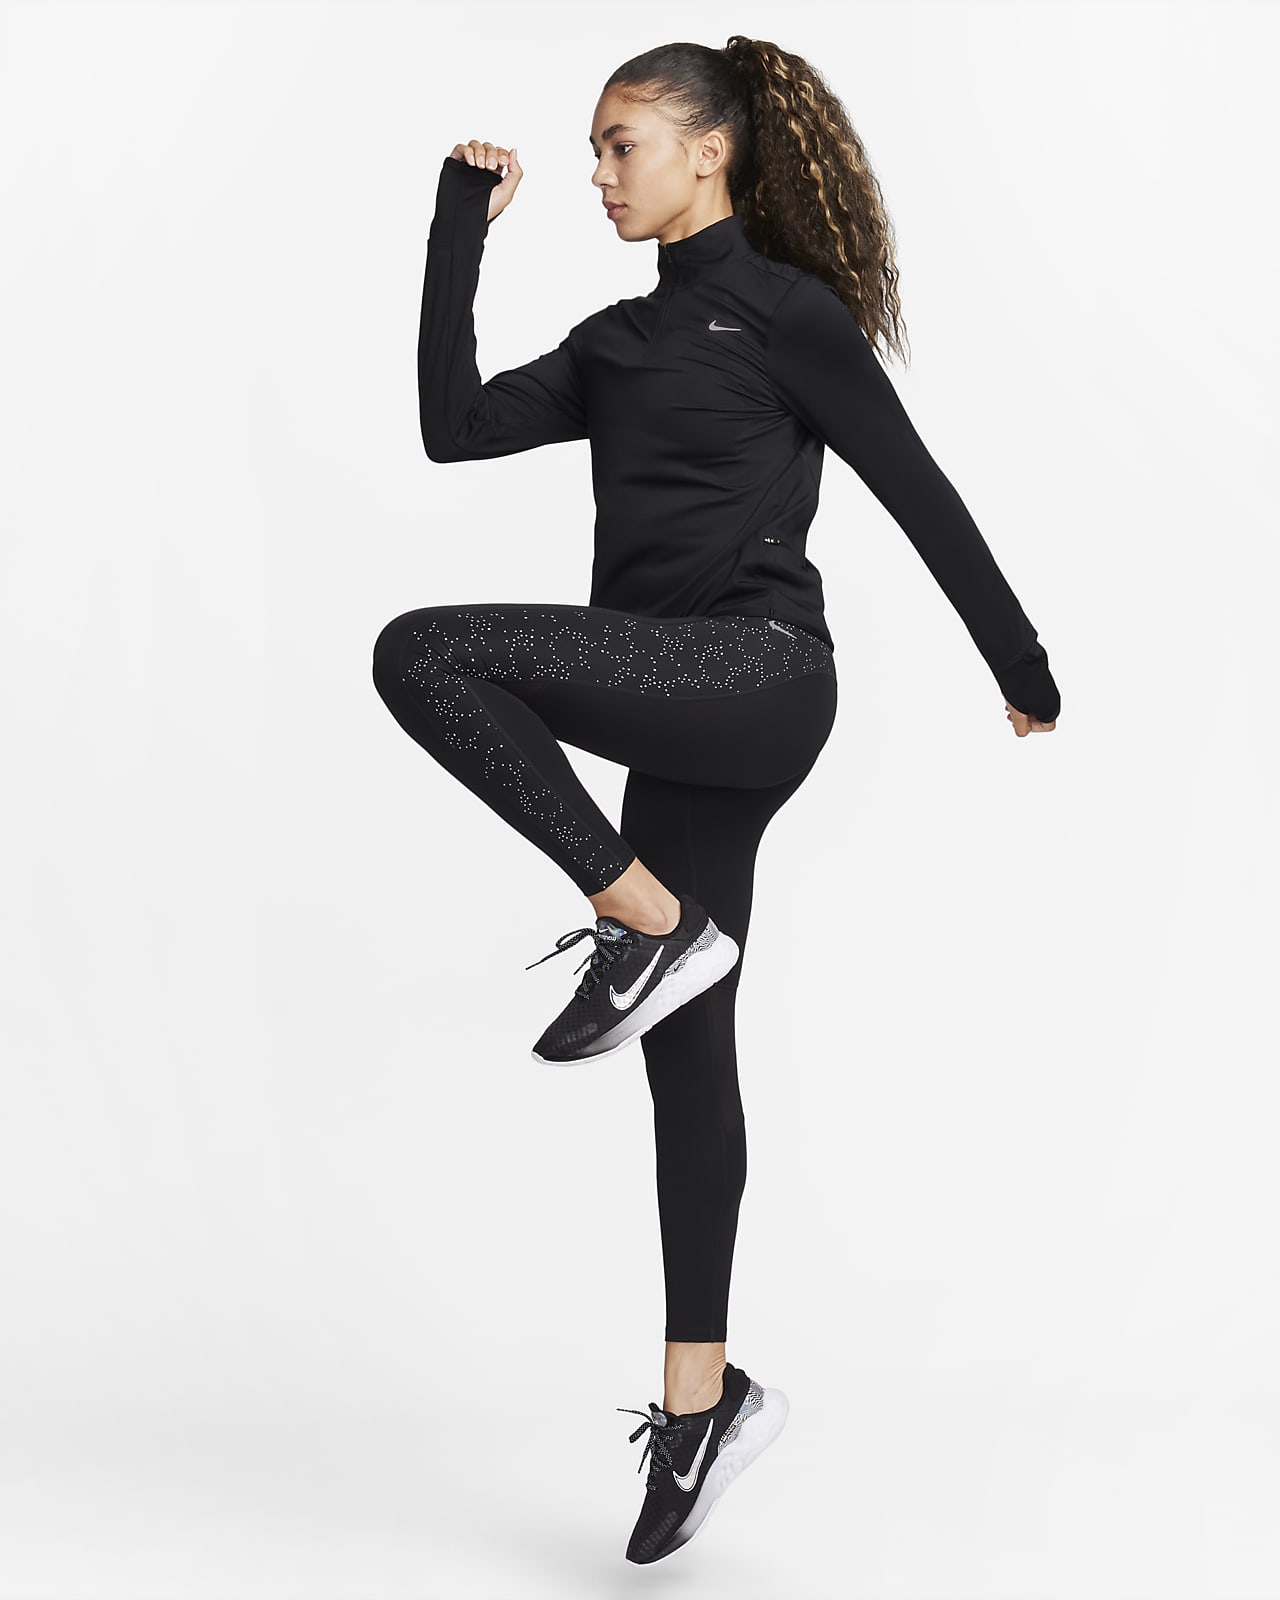 New Nike Fast Women's 7/8 Running Crops tights black BV0038-010 Size Medium